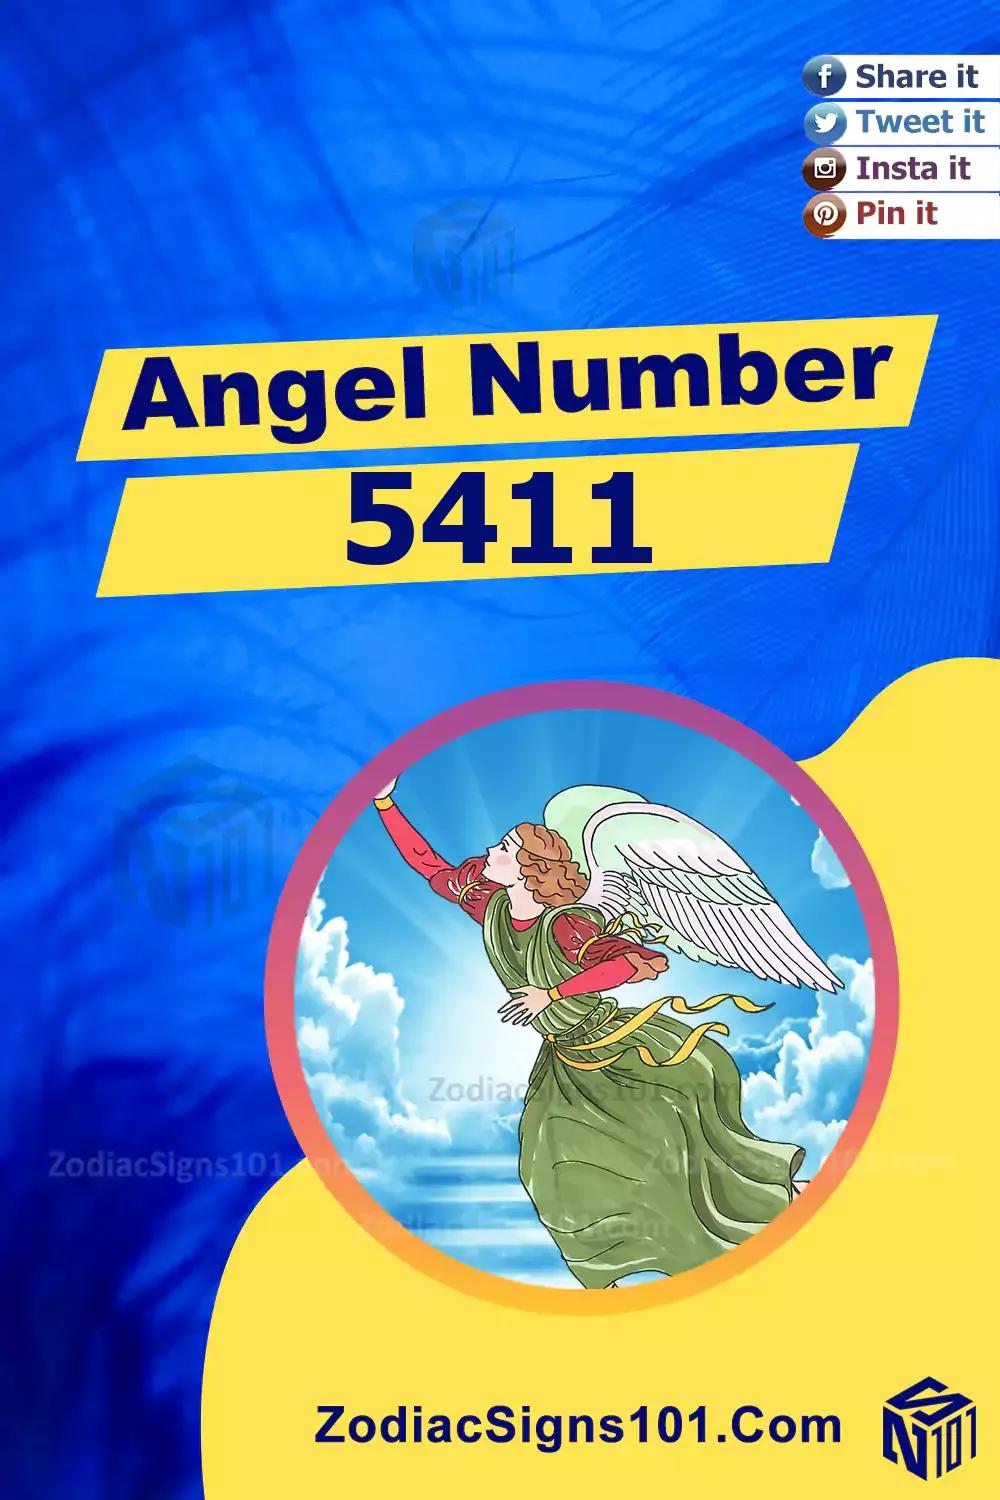 5411-Angel-Number-Meaning.jpg